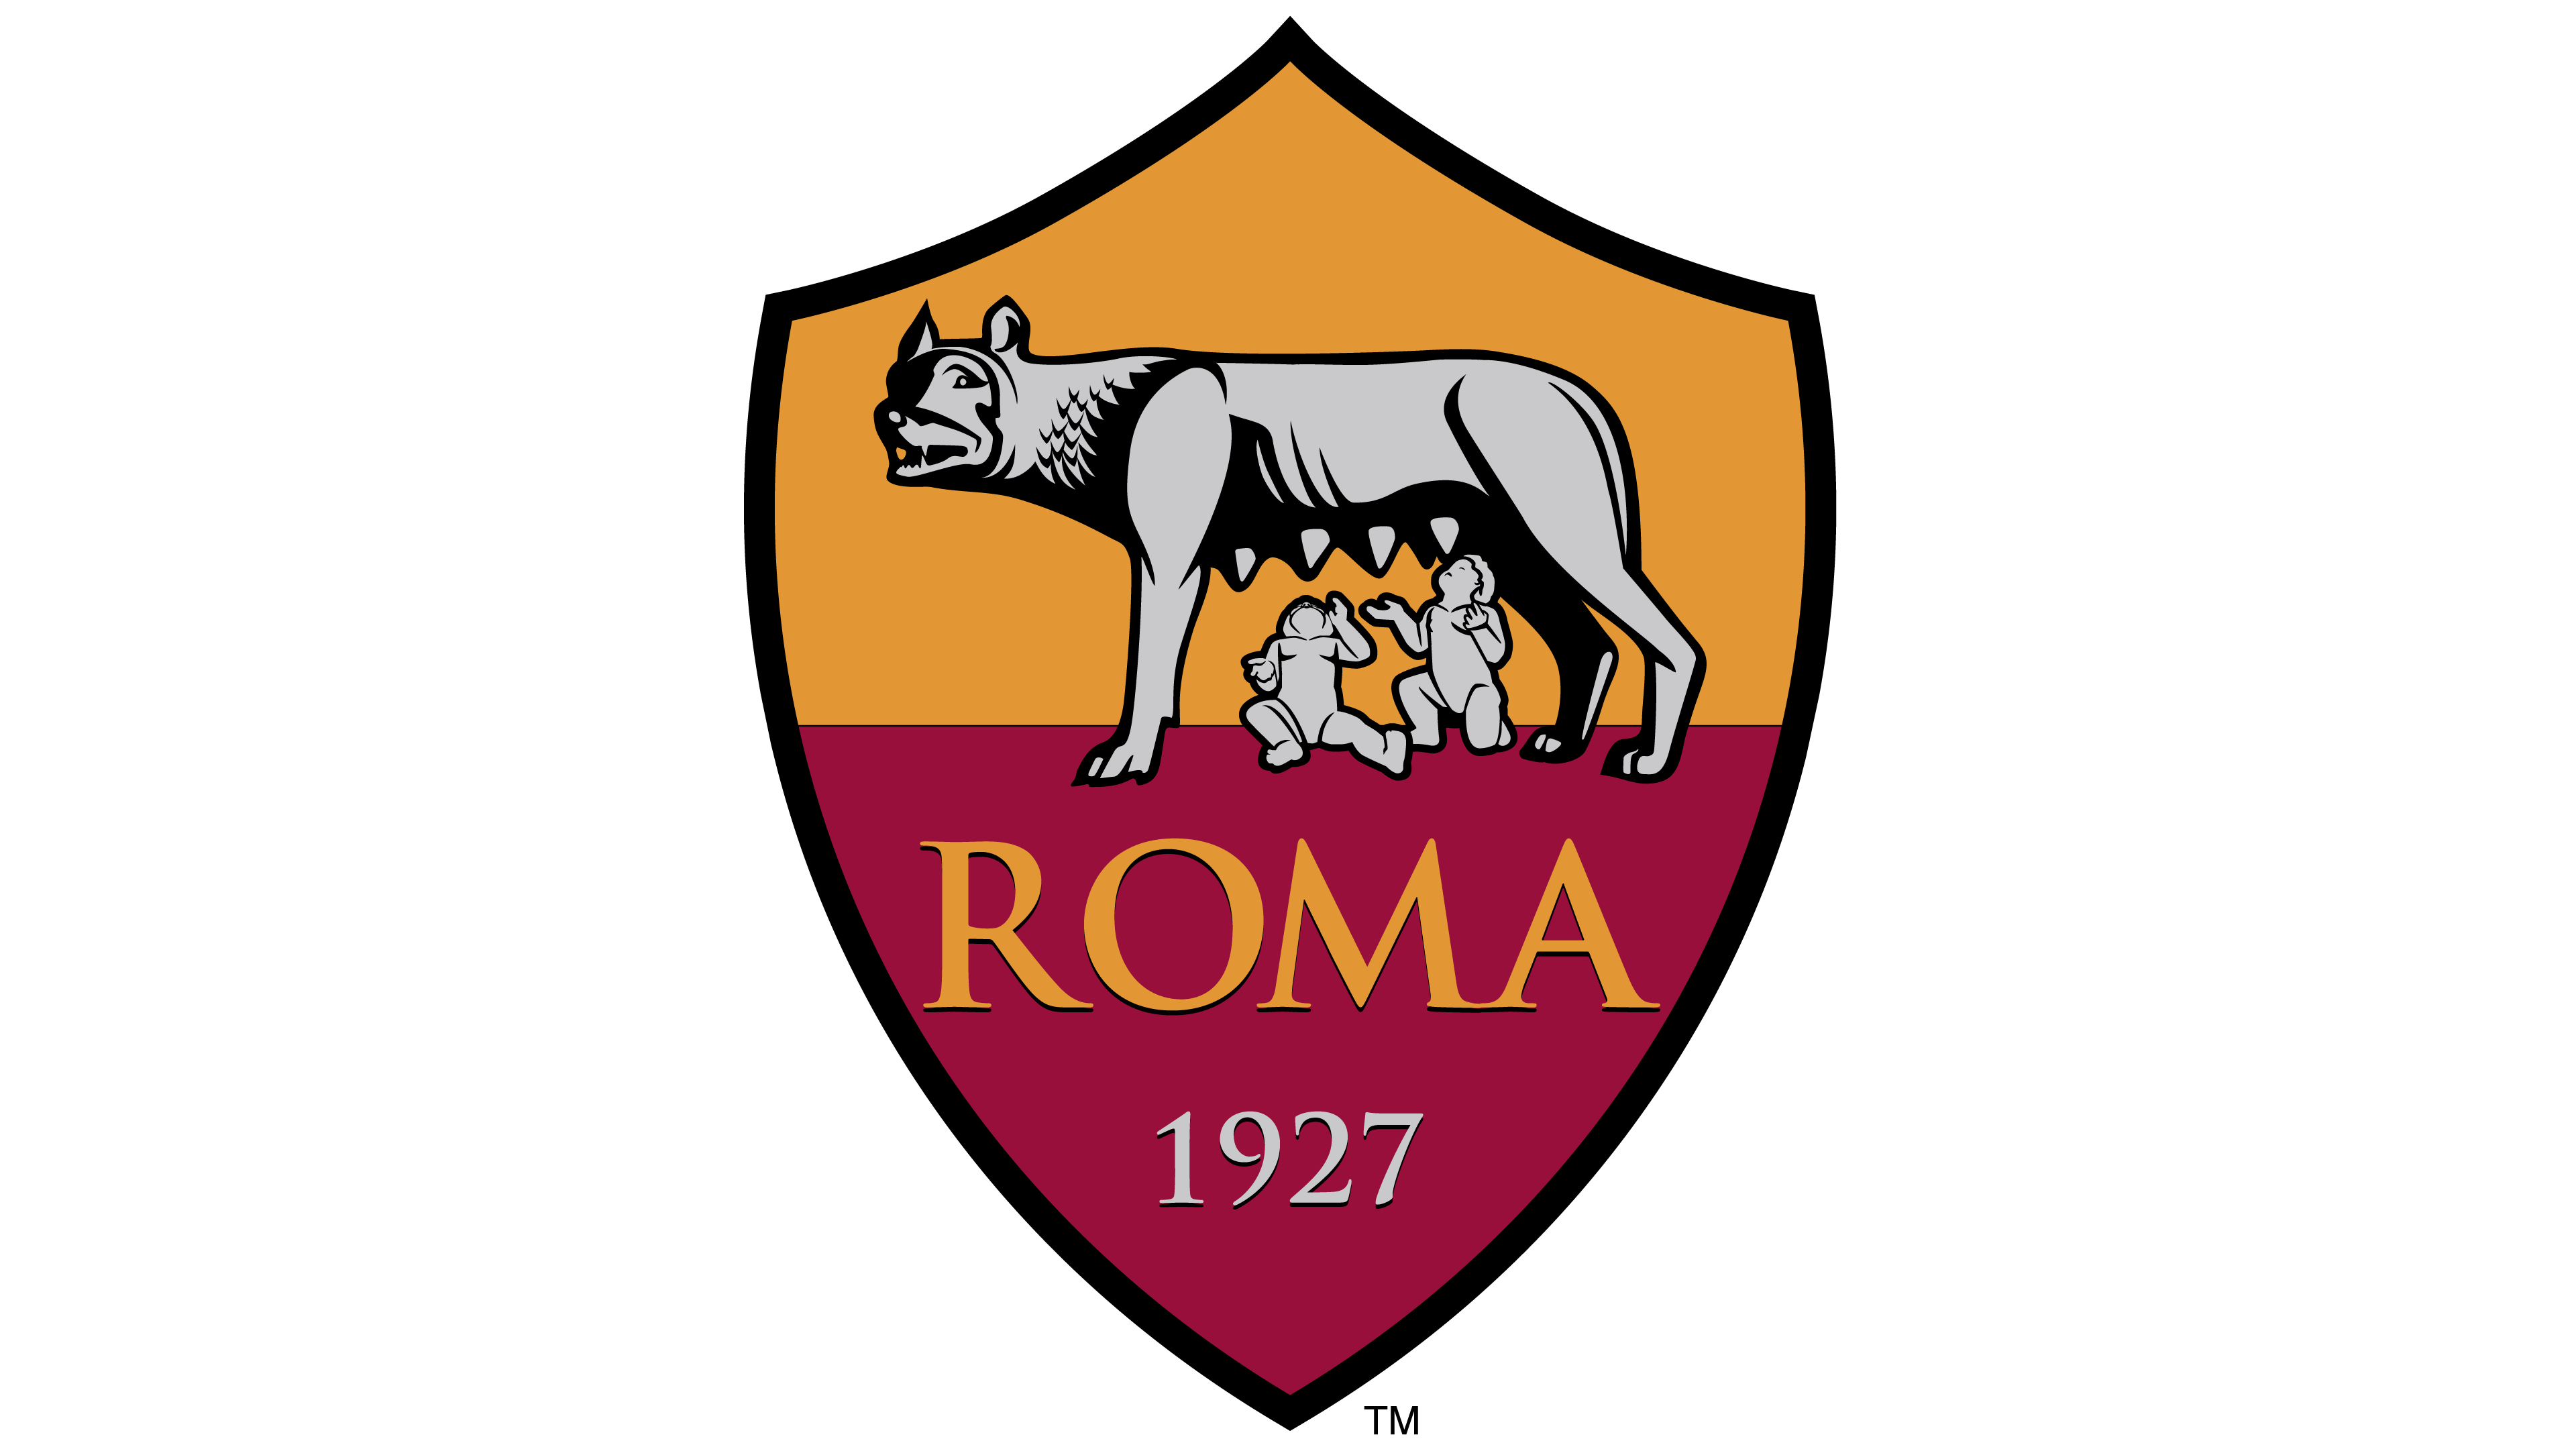 Roma Logo - Roma logo - Interesting History of the Team Name and emblem